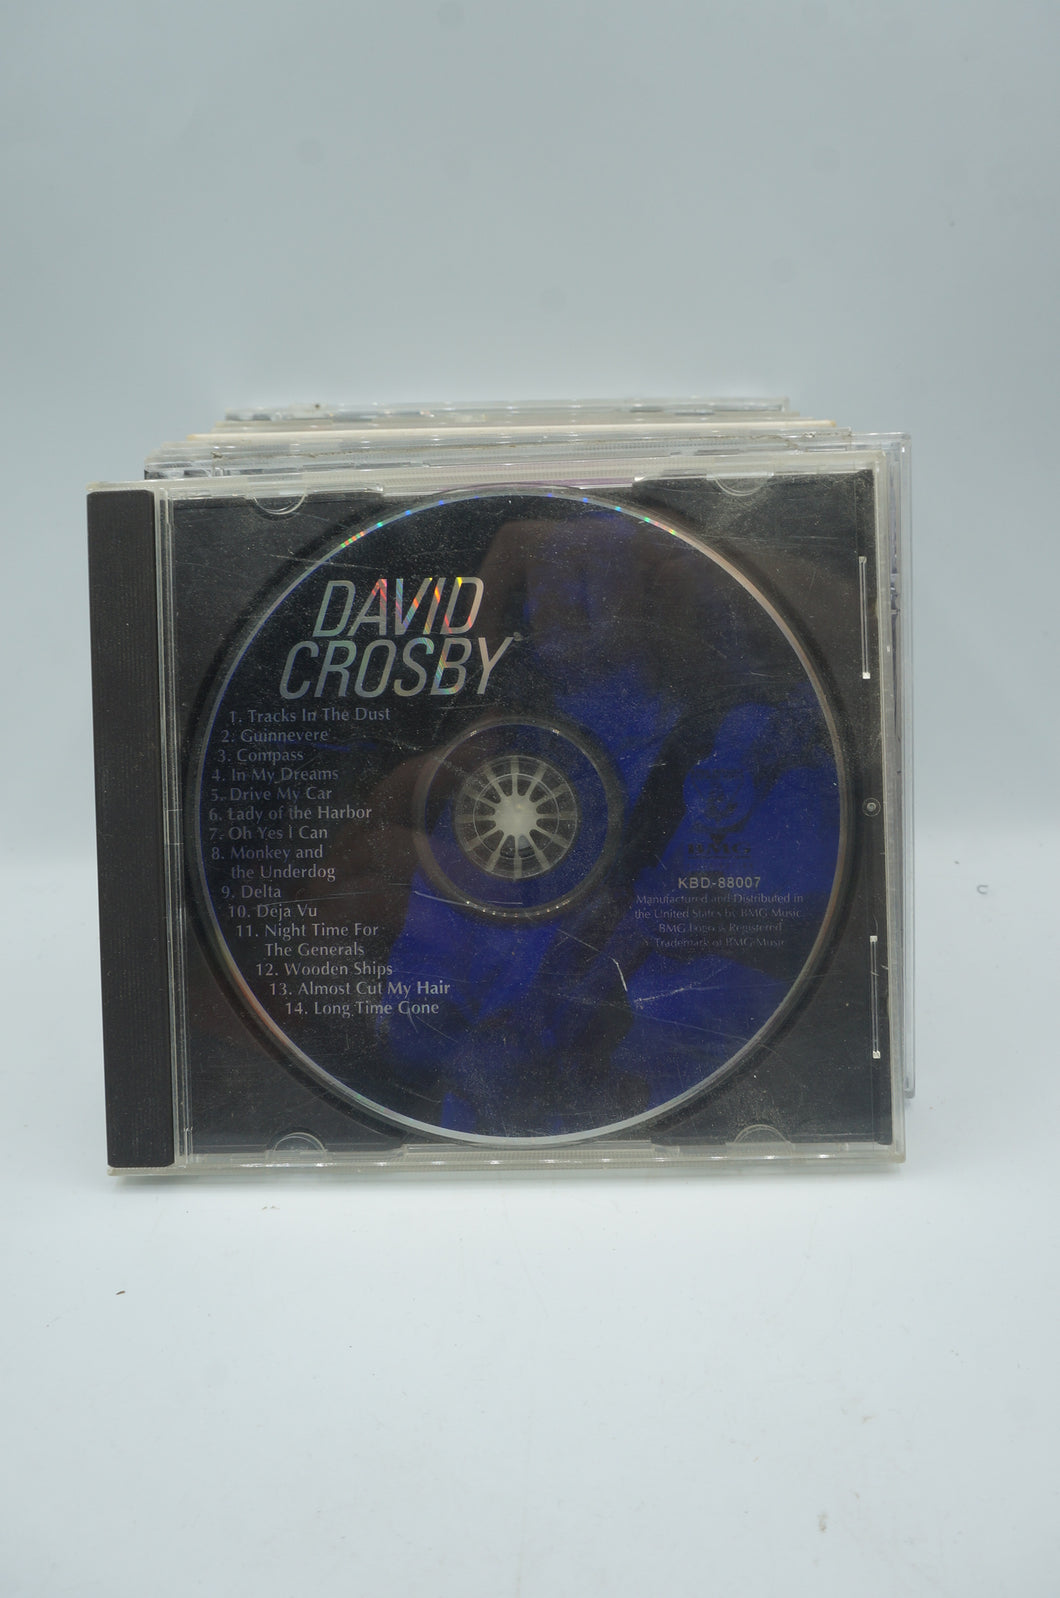 ﻿David Crosby CD- OhioHippies.com